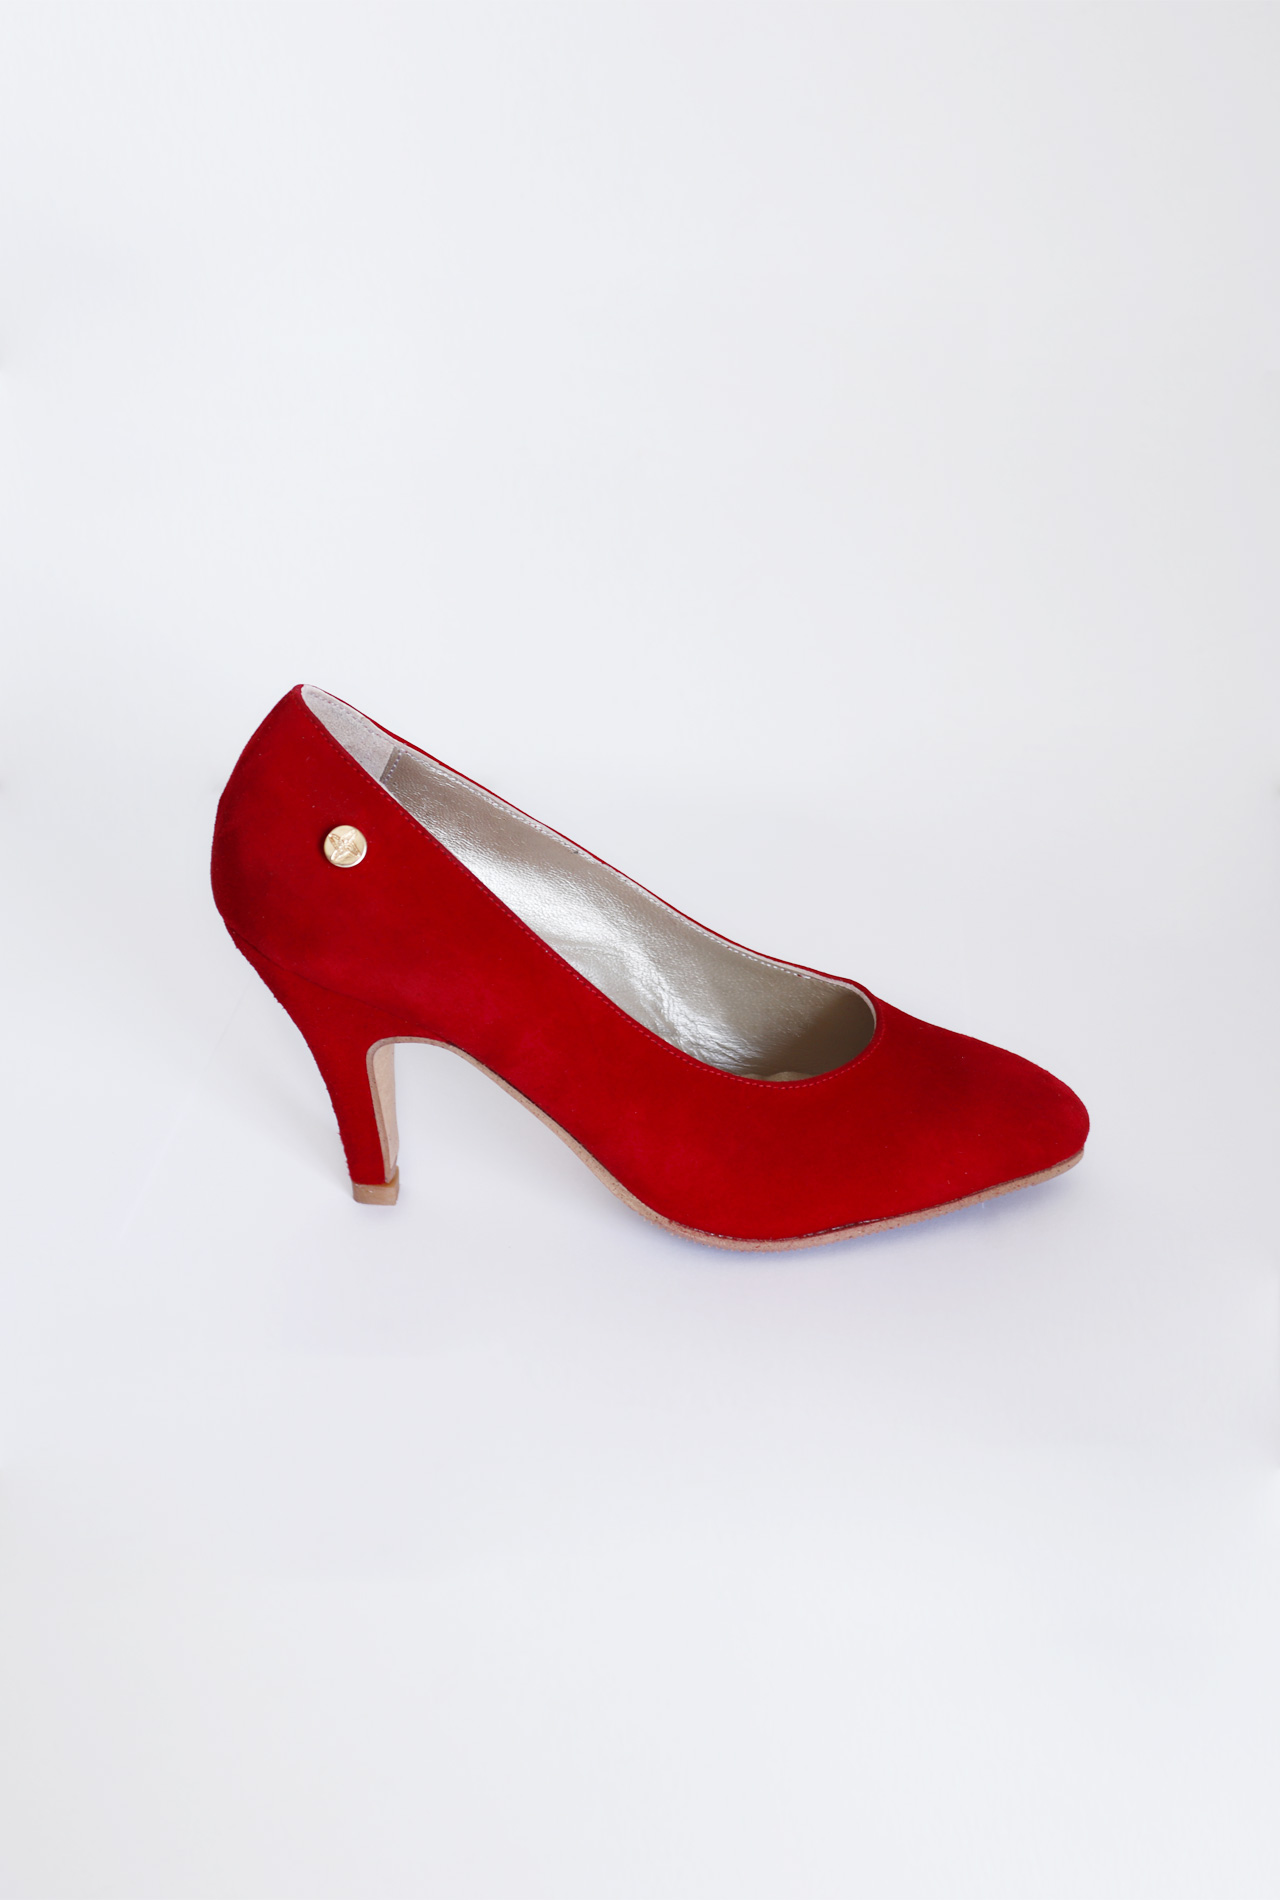 Fashion Women Pumps Faux Suede High Heels Wine Red Shoes Woman Plus Size  4-20 | eBay